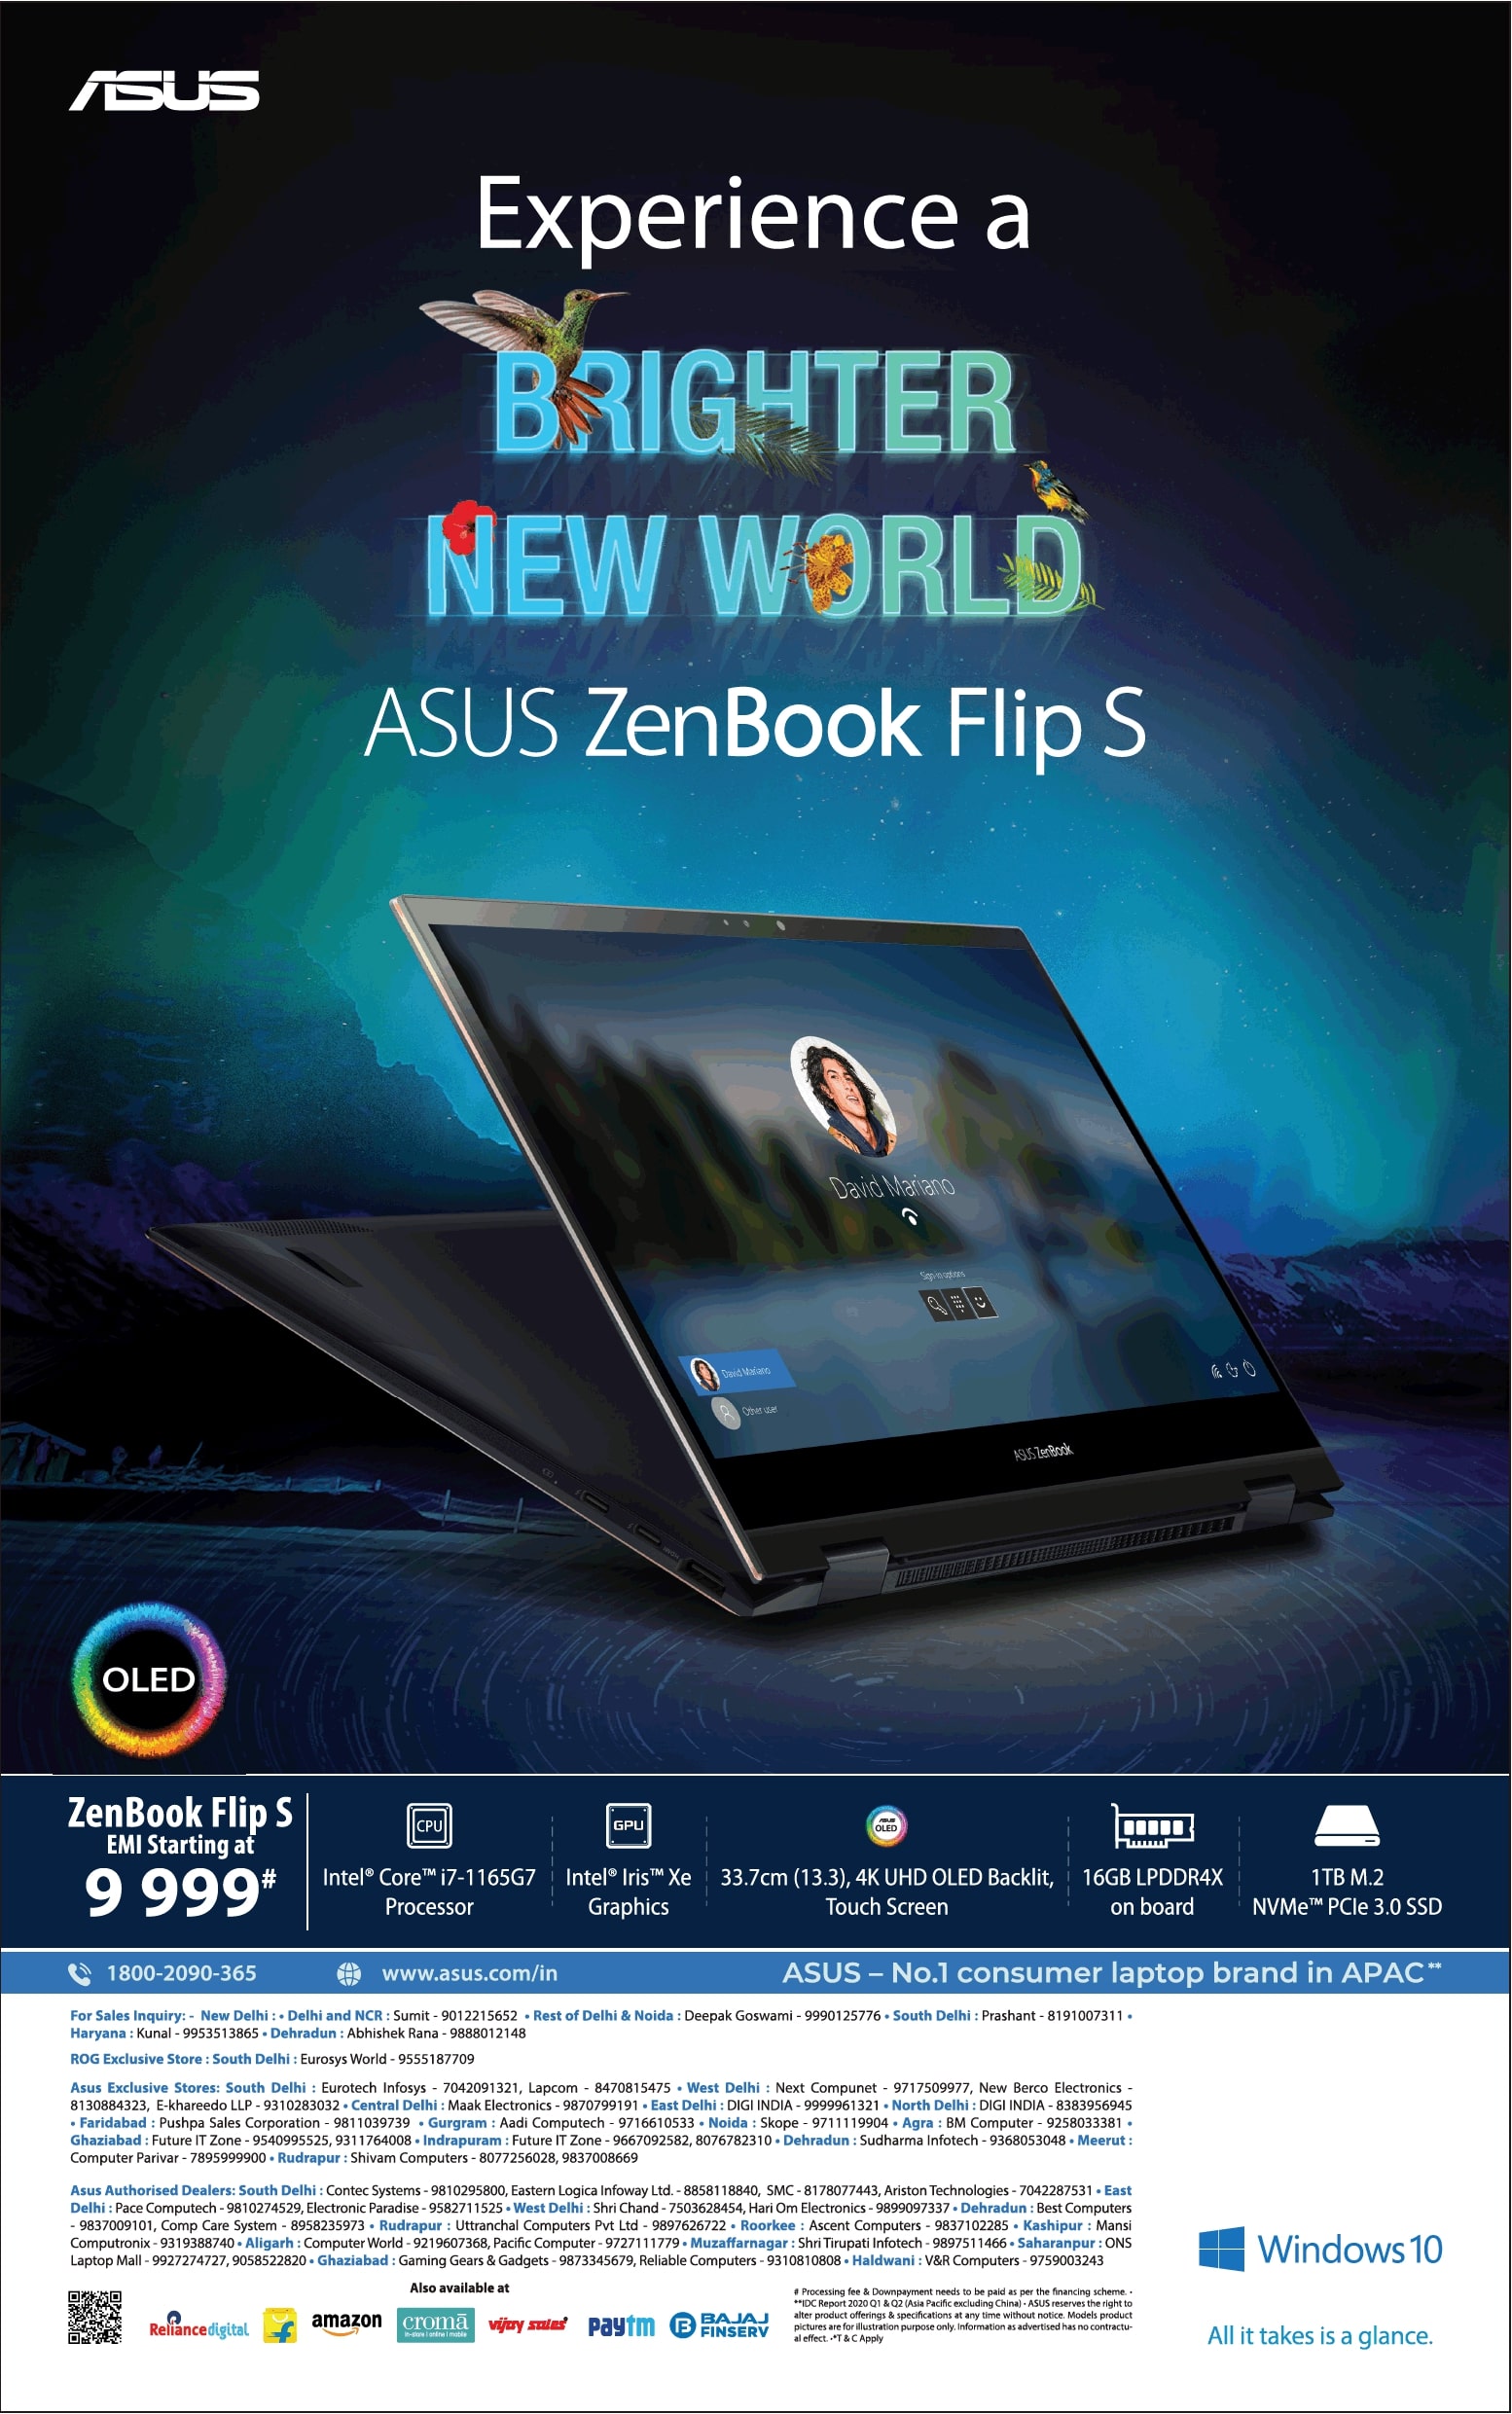 asus-zen-book-flip-s-laptop-experience-a-brighter-new-world-ad-toi-delhi-26-12-2020